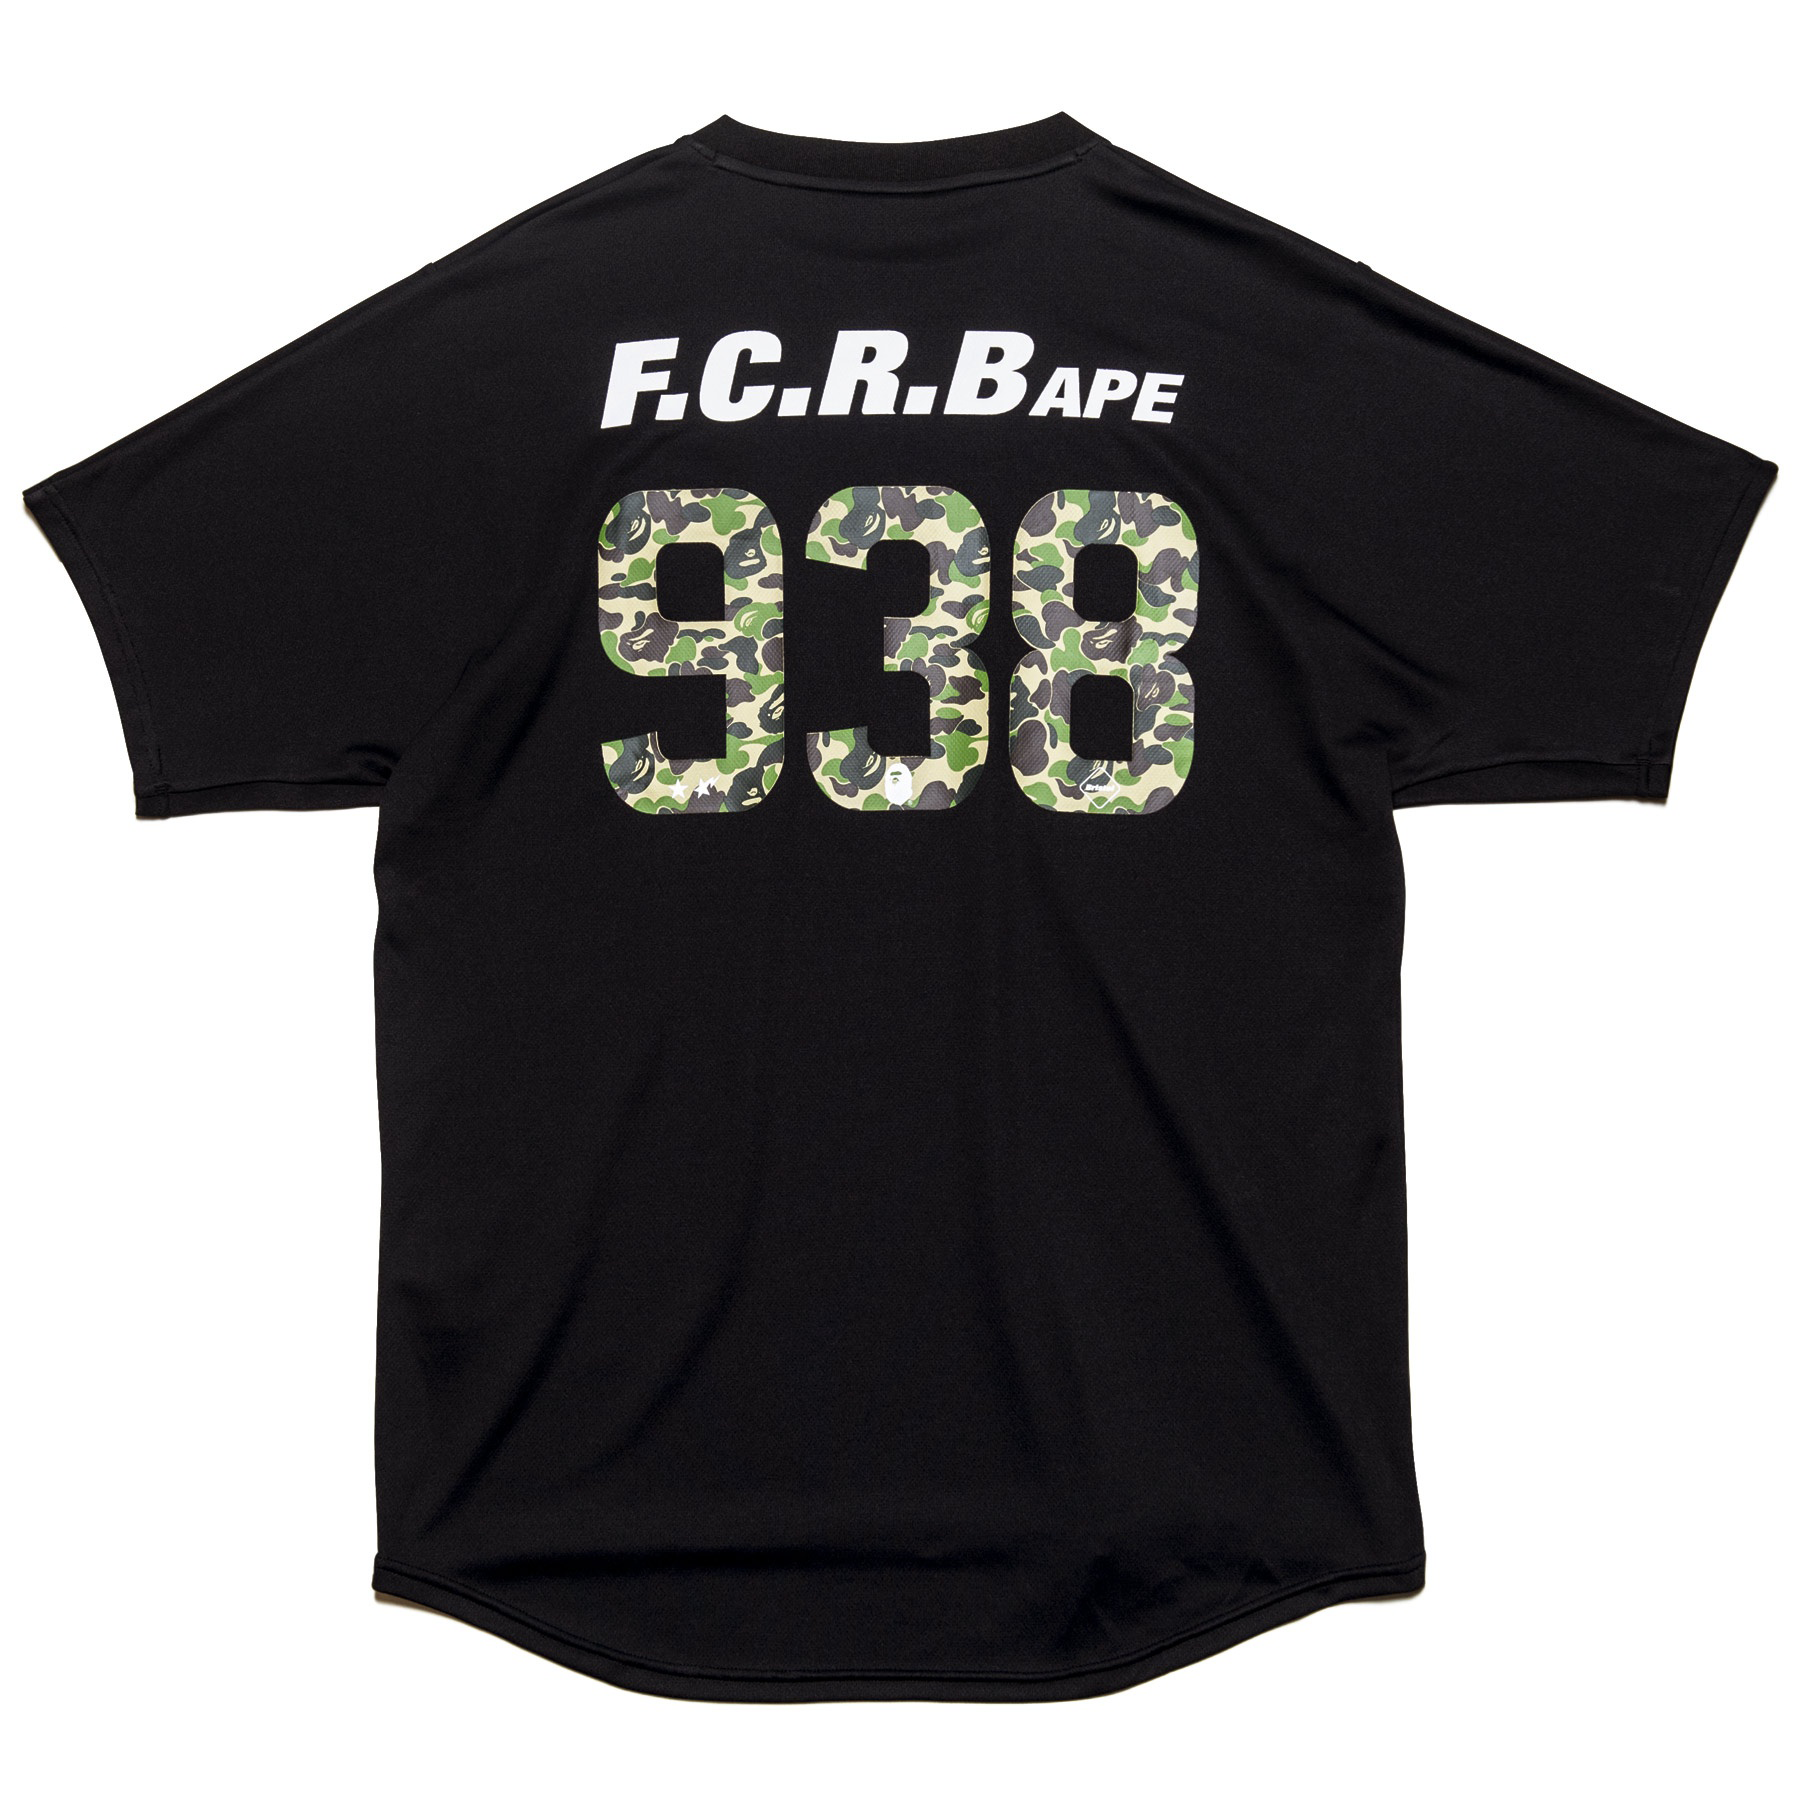 BAPE x F.C.R.B. 938 Team Tee Black Men's - SS19 - US